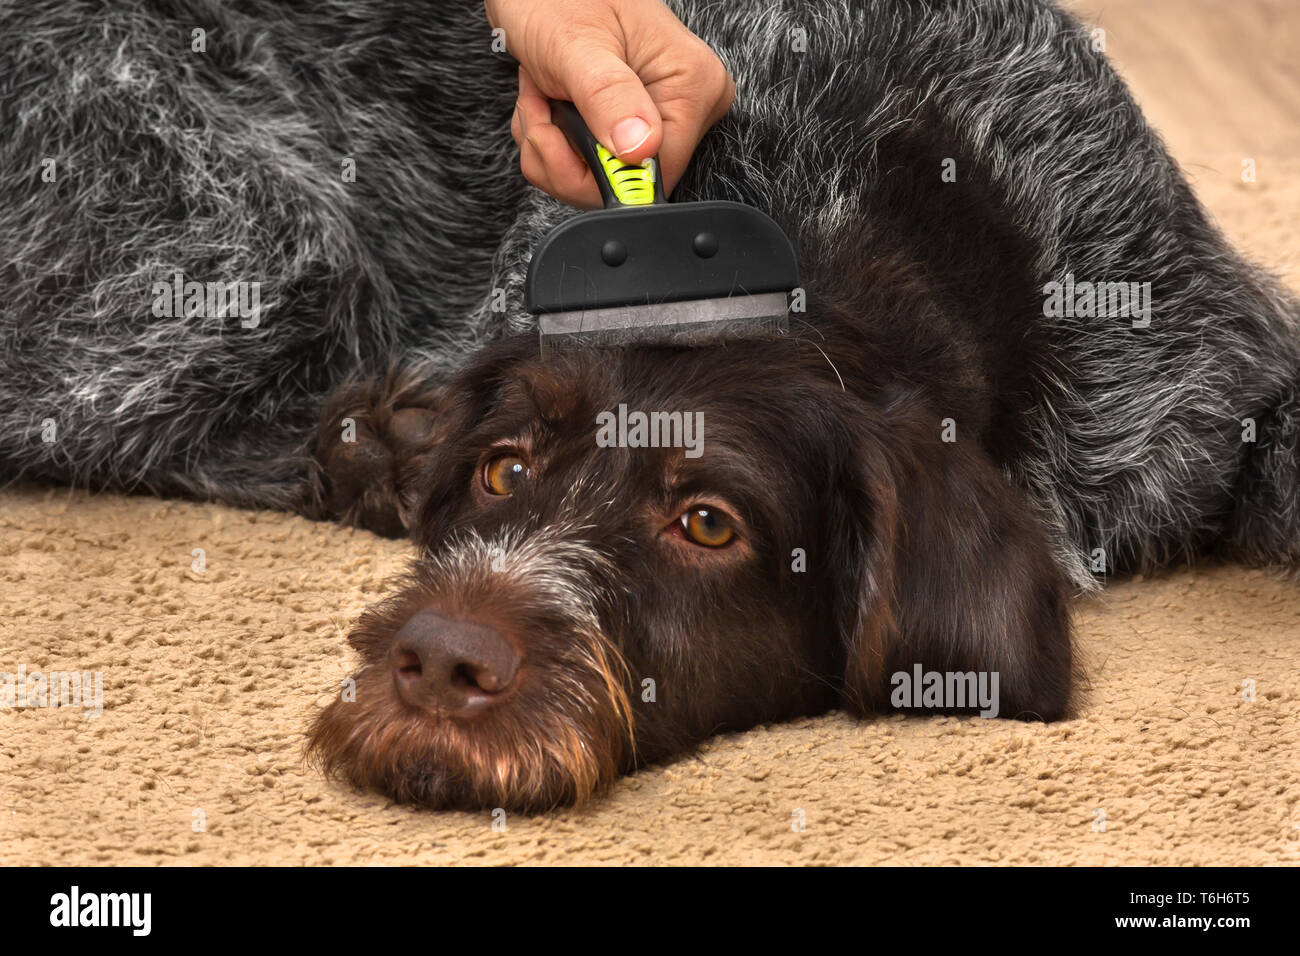 female hand with furminator takes care of the dog, closeup Stock Photo